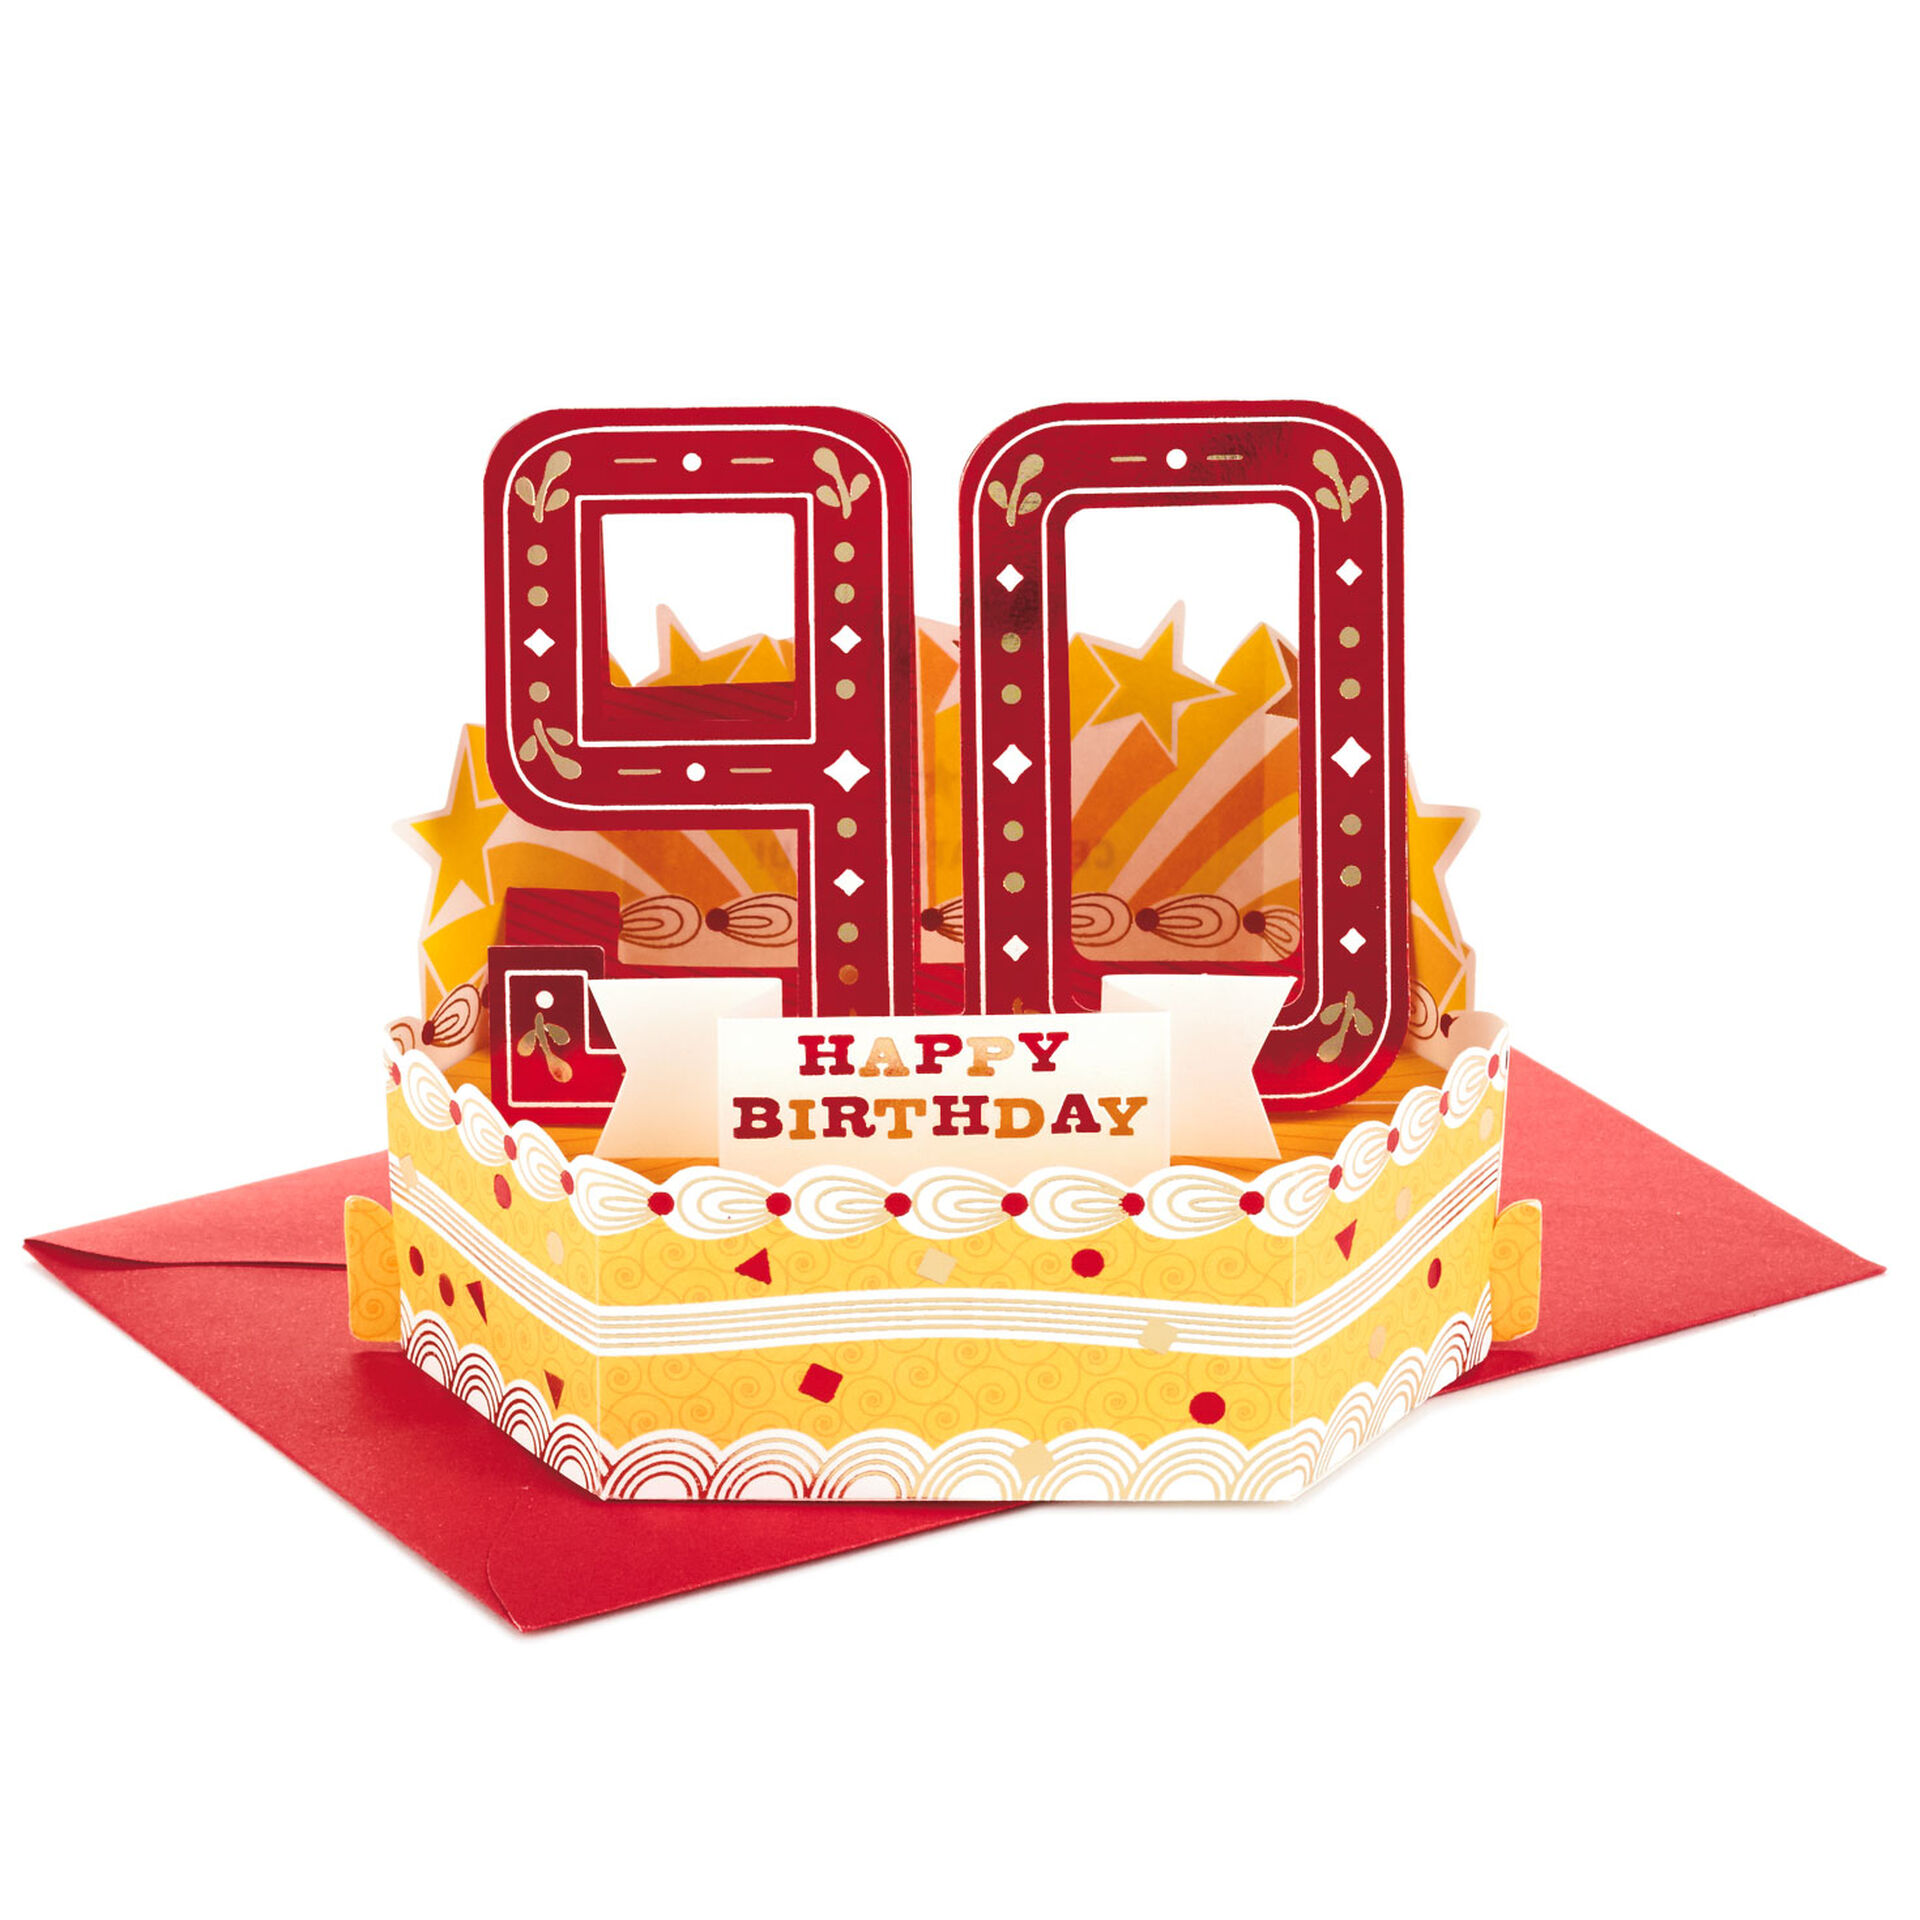 Celebrating You Mini Pop Up 90th Birthday Card - Greeting Cards - Hallmark